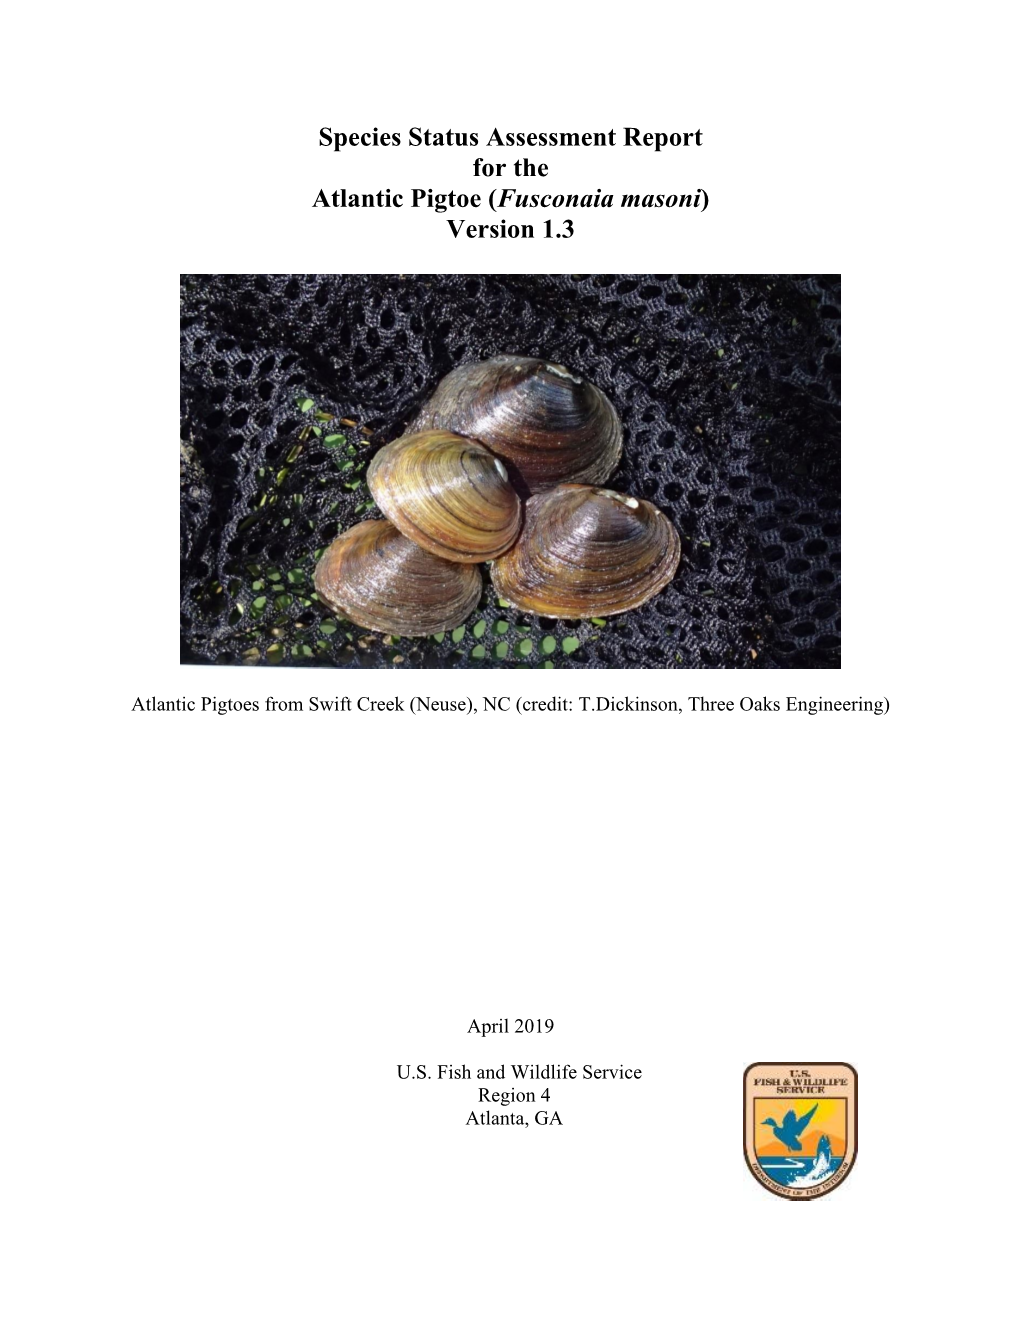 Atlantic Pigtoe Species Status Assessment